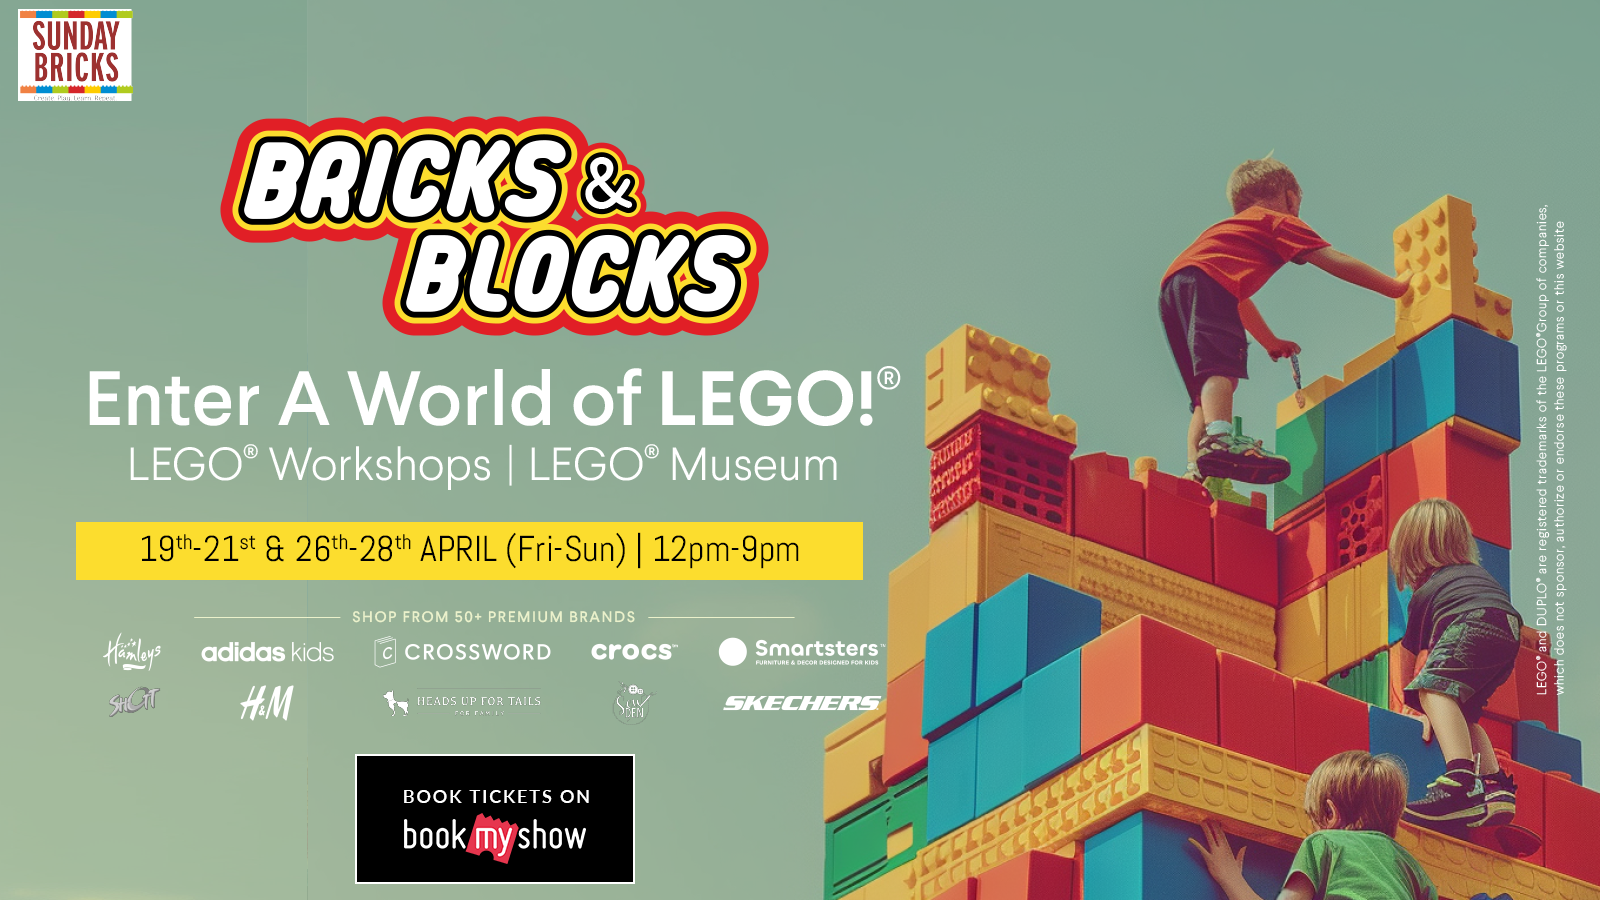 Image: Bricks & Blocks